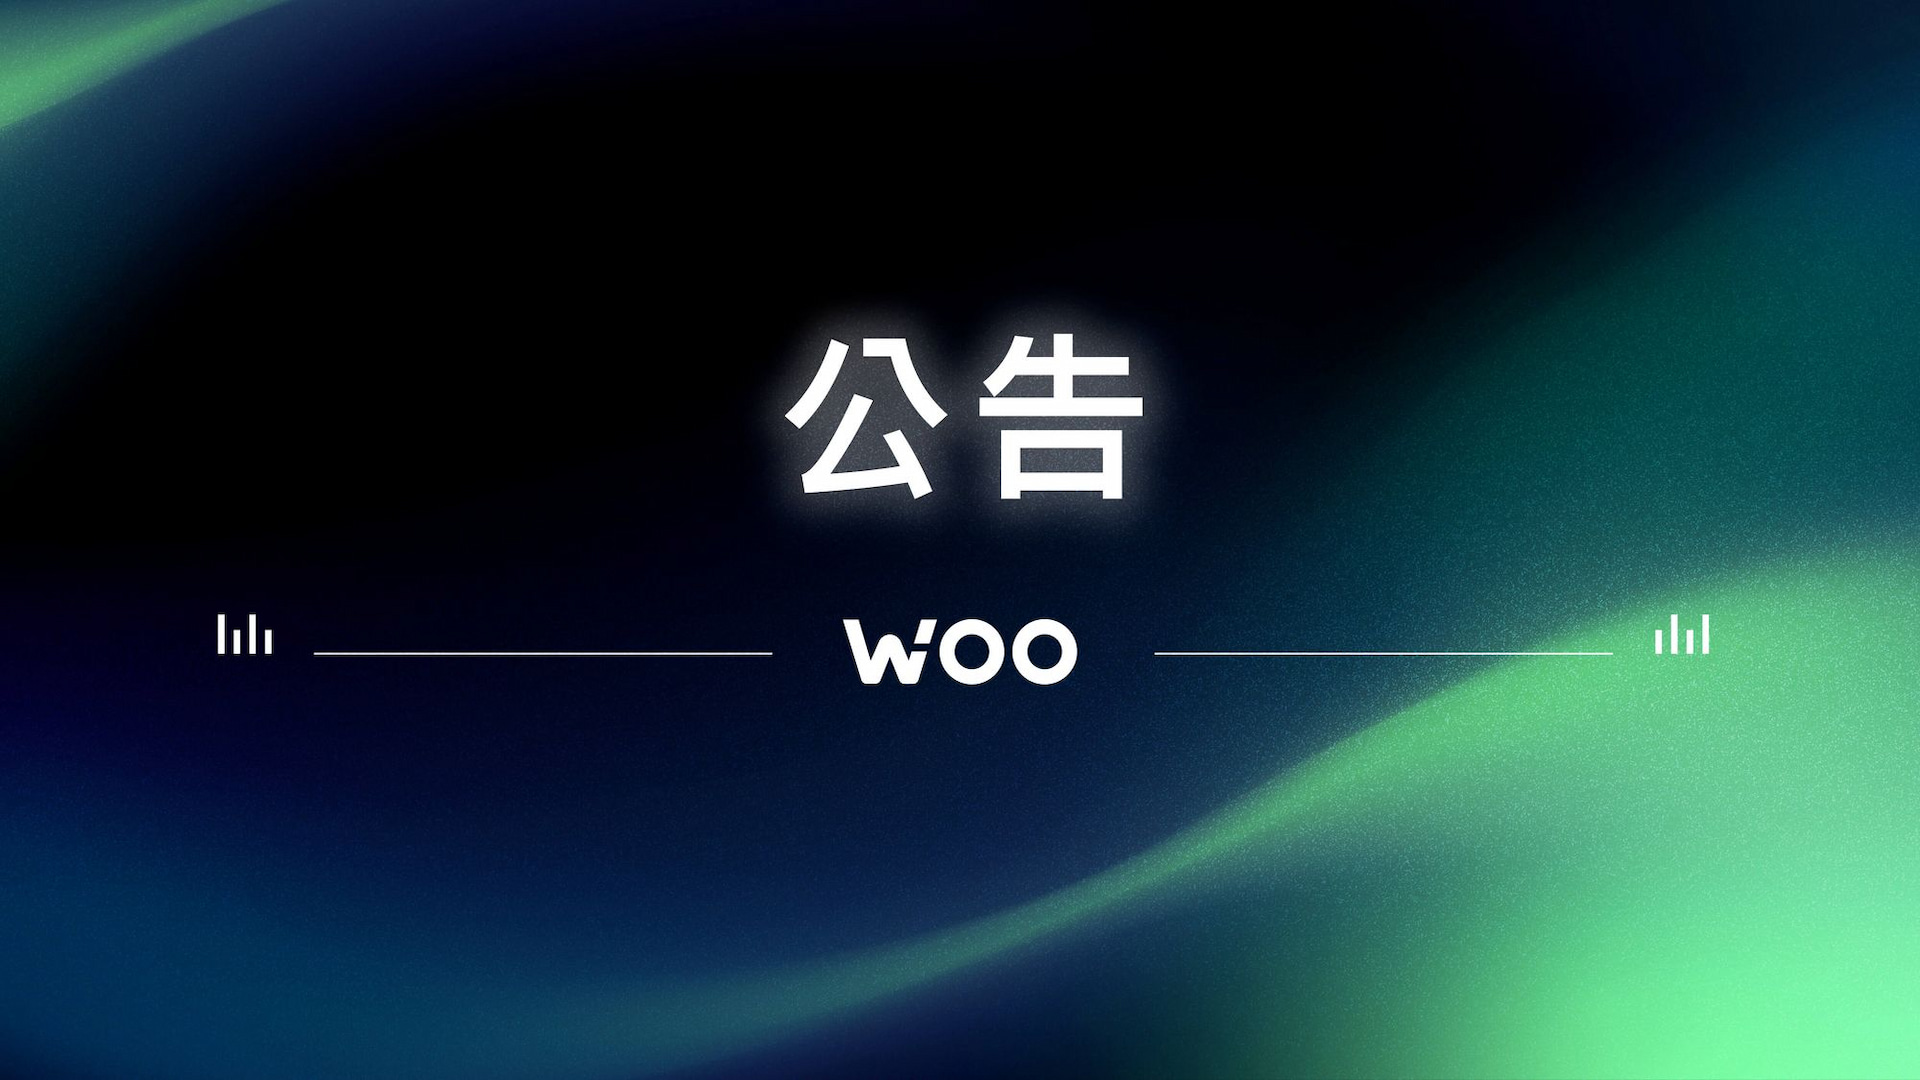 WOO X Global 在做市商之一發生安全事件後，現已恢復正常營運